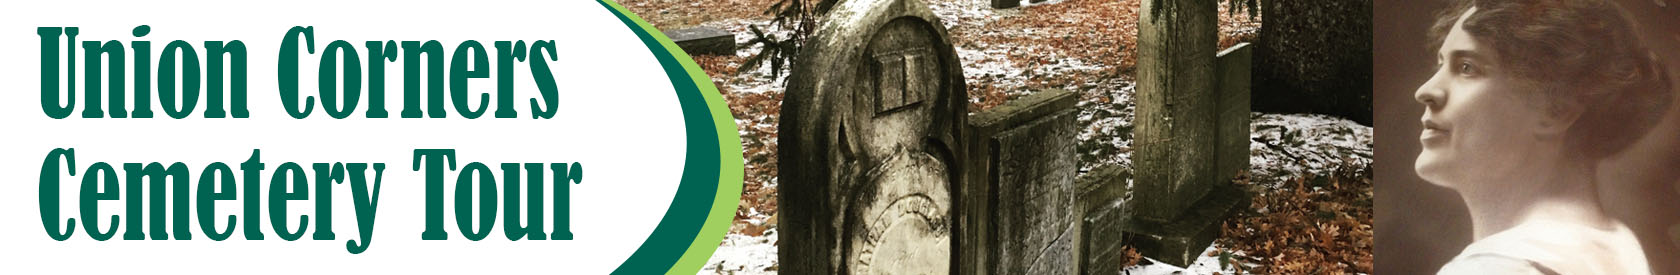 (SOLD OUT) Union Corners Cemetery Tour: Odd Deaths & Unique Markers